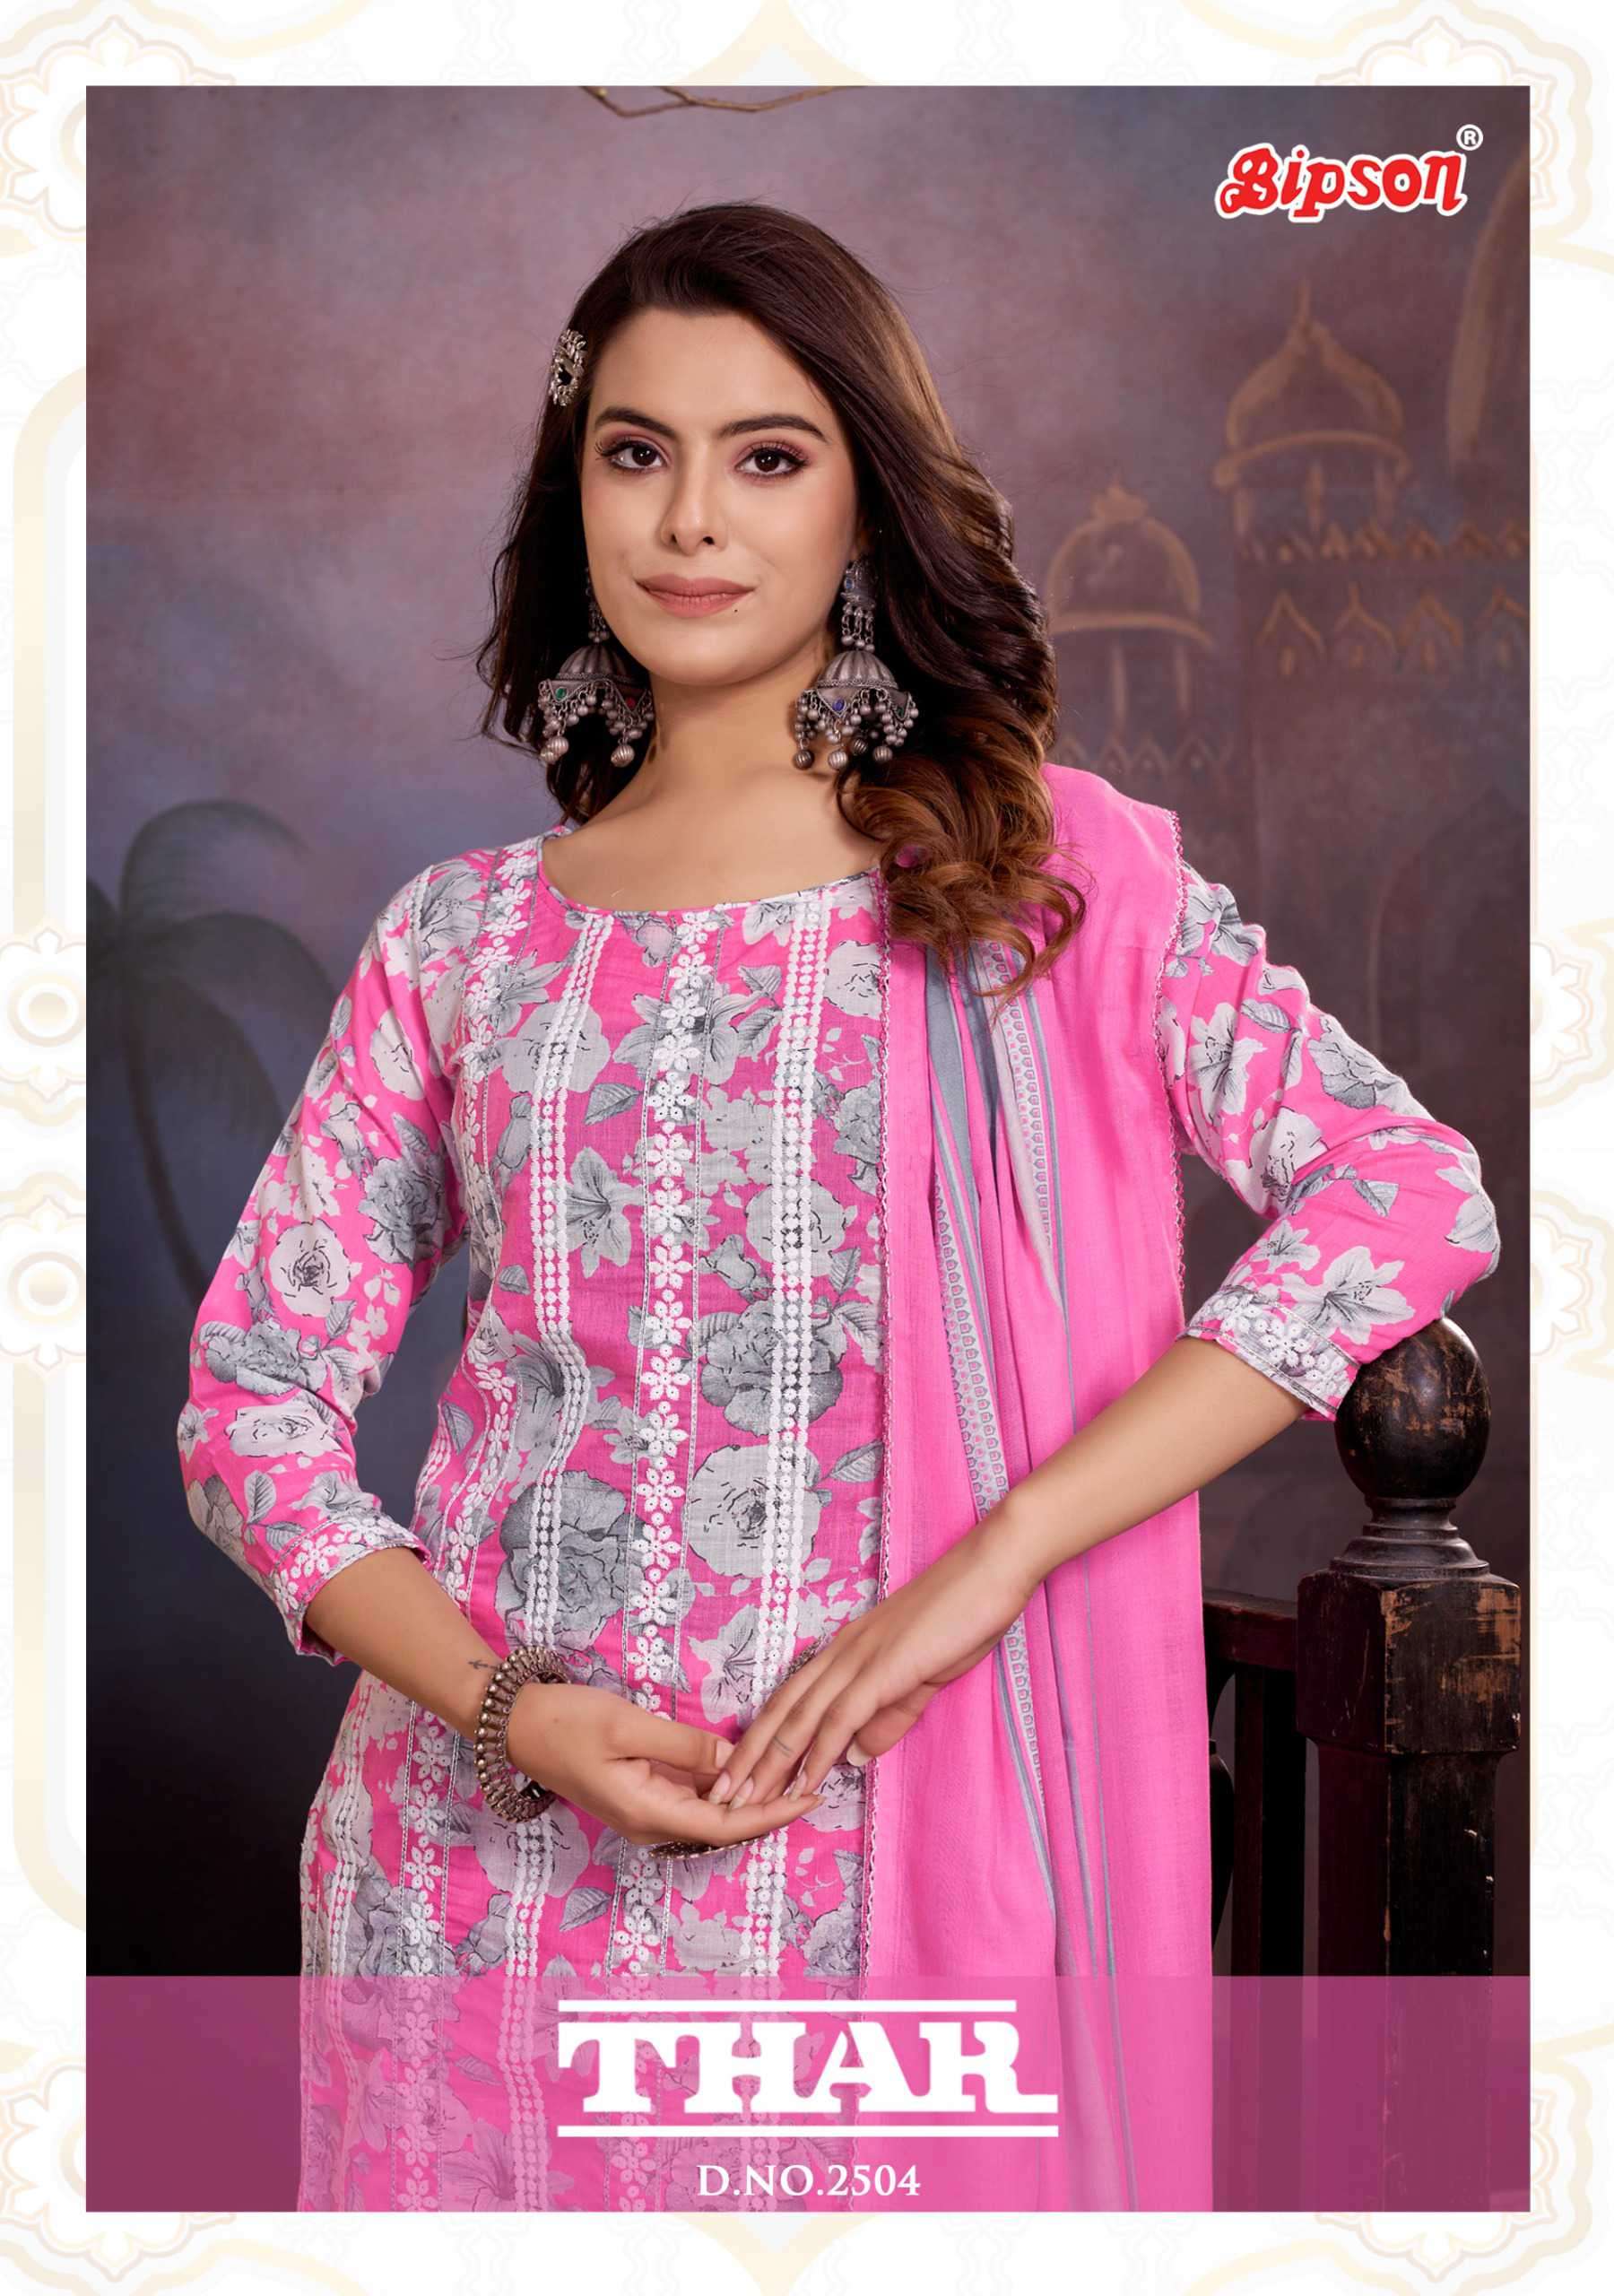 Bipson Thar 2504 Pure Cotton Ladies Dress Suppliers In Surat